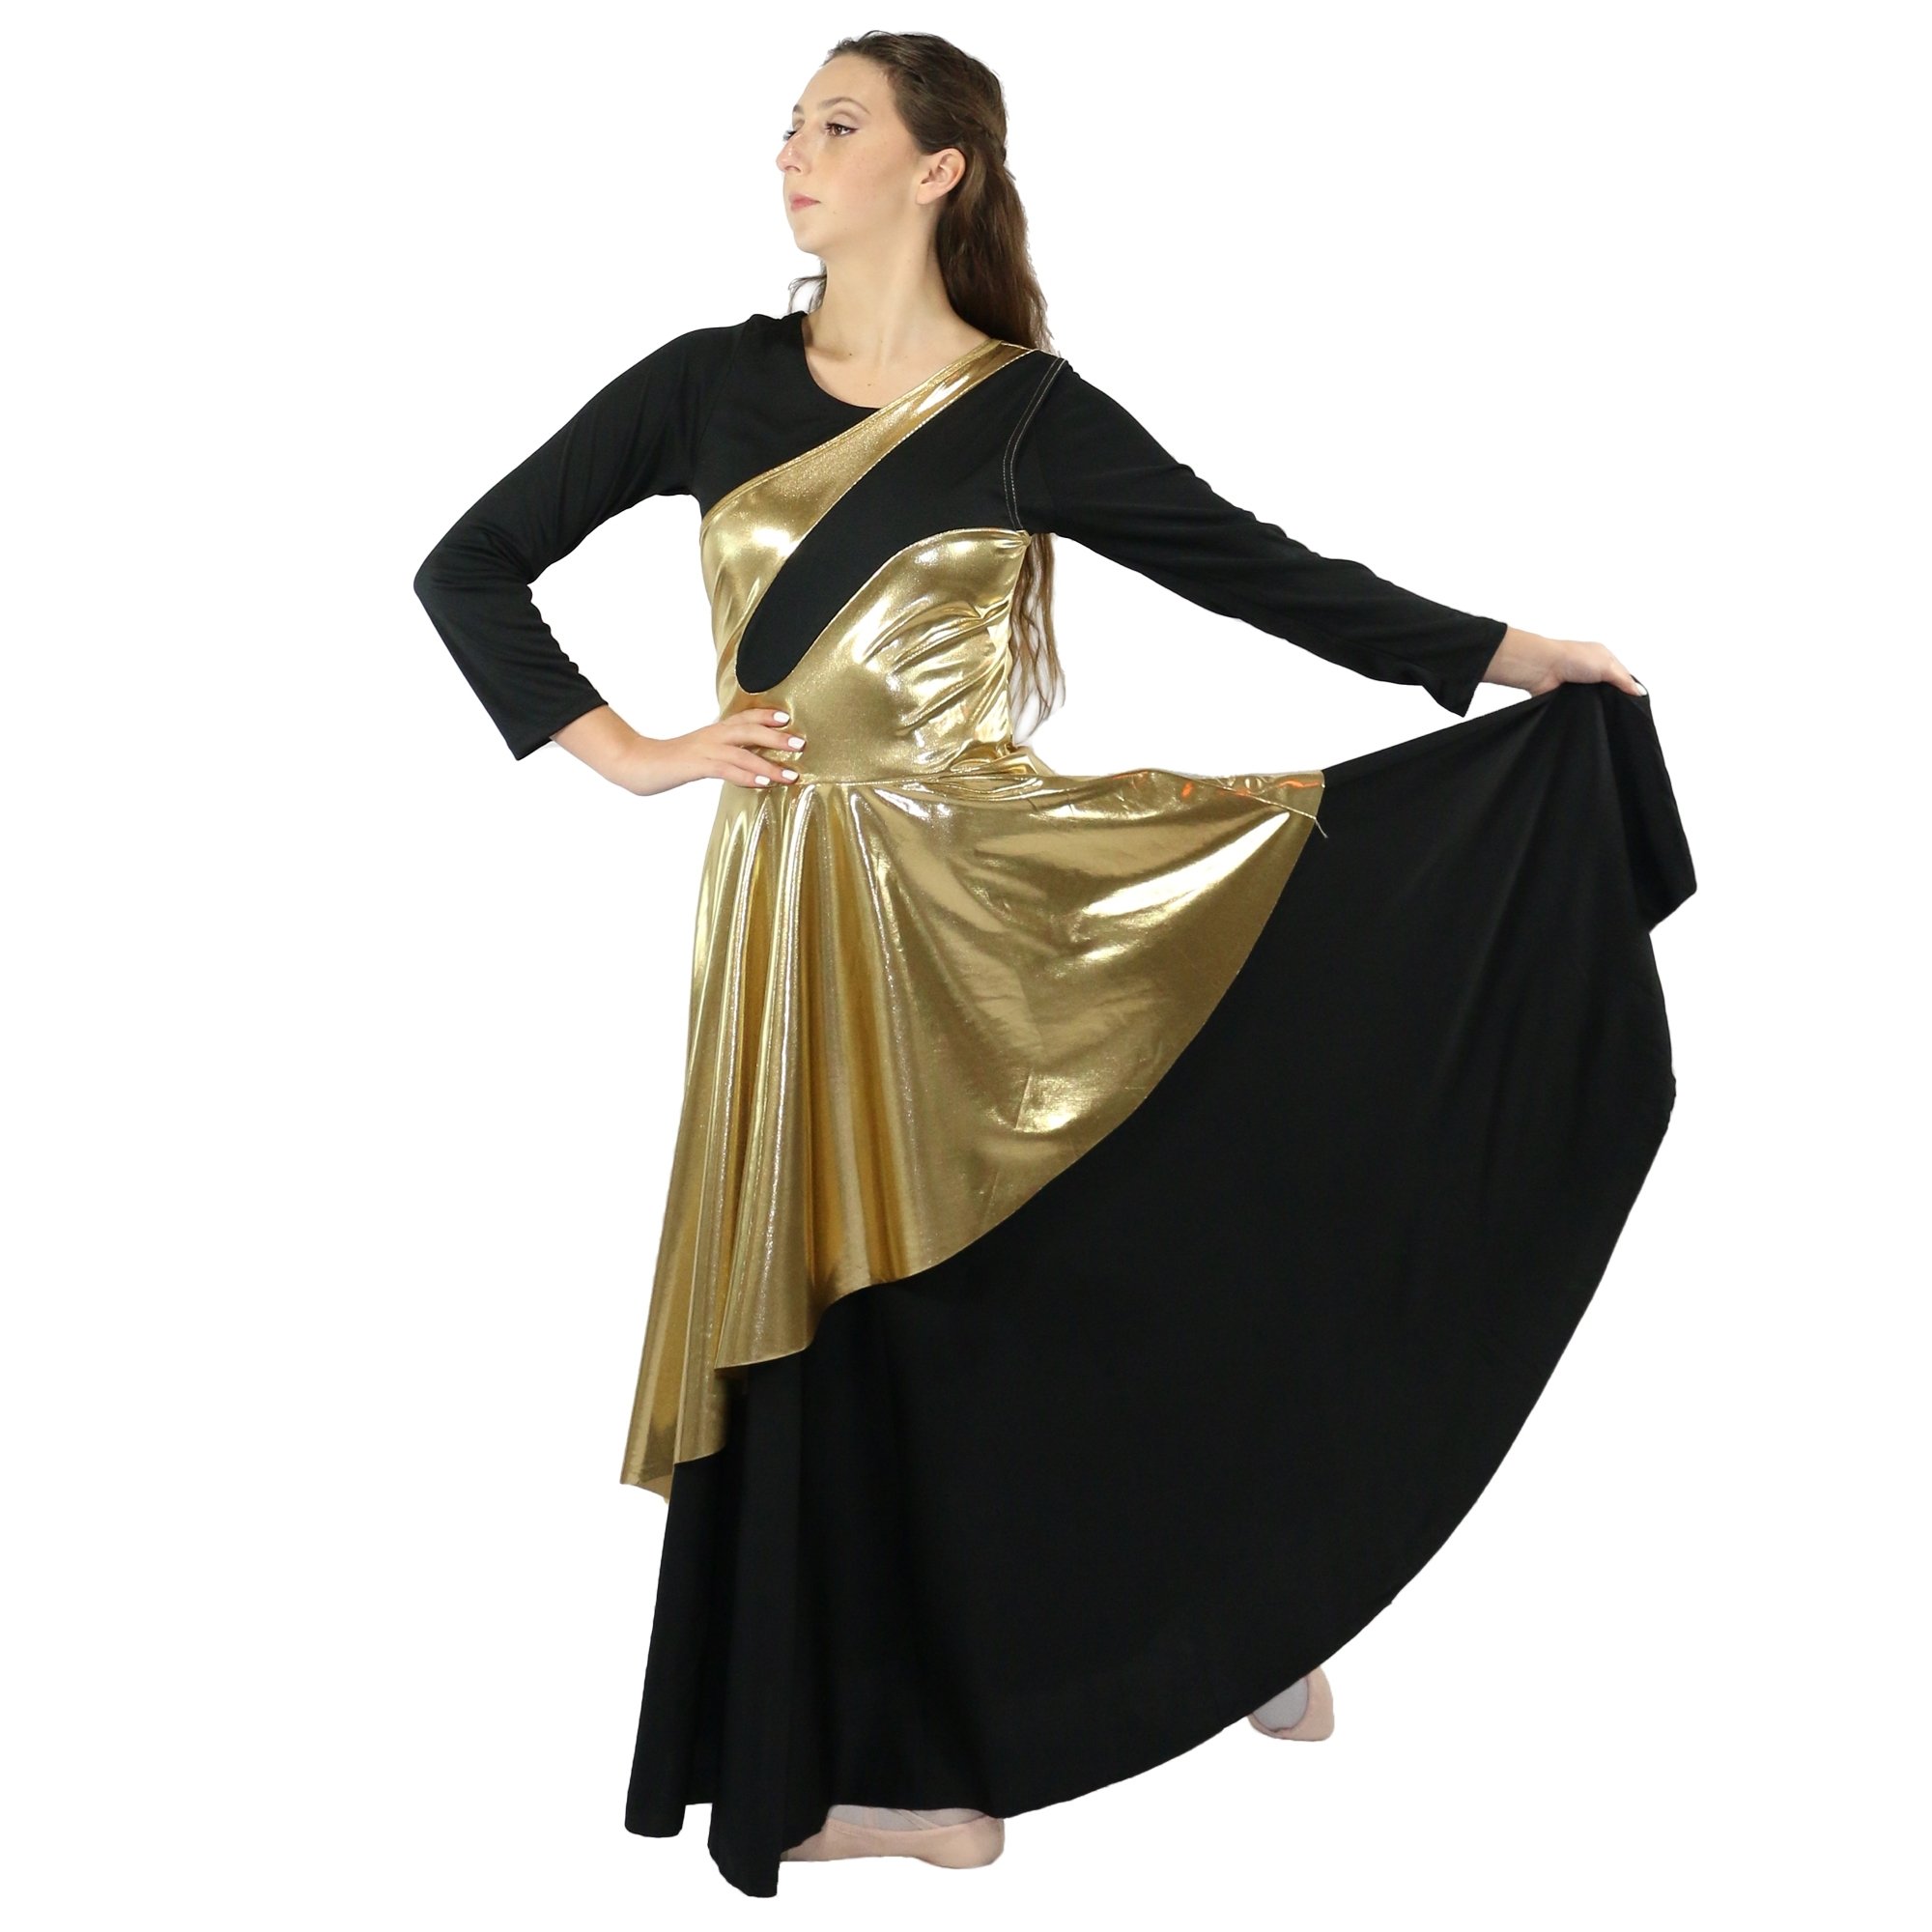 Danzcue Women's Worship Asymmetrical Praise Dance Sleeveless Tunic